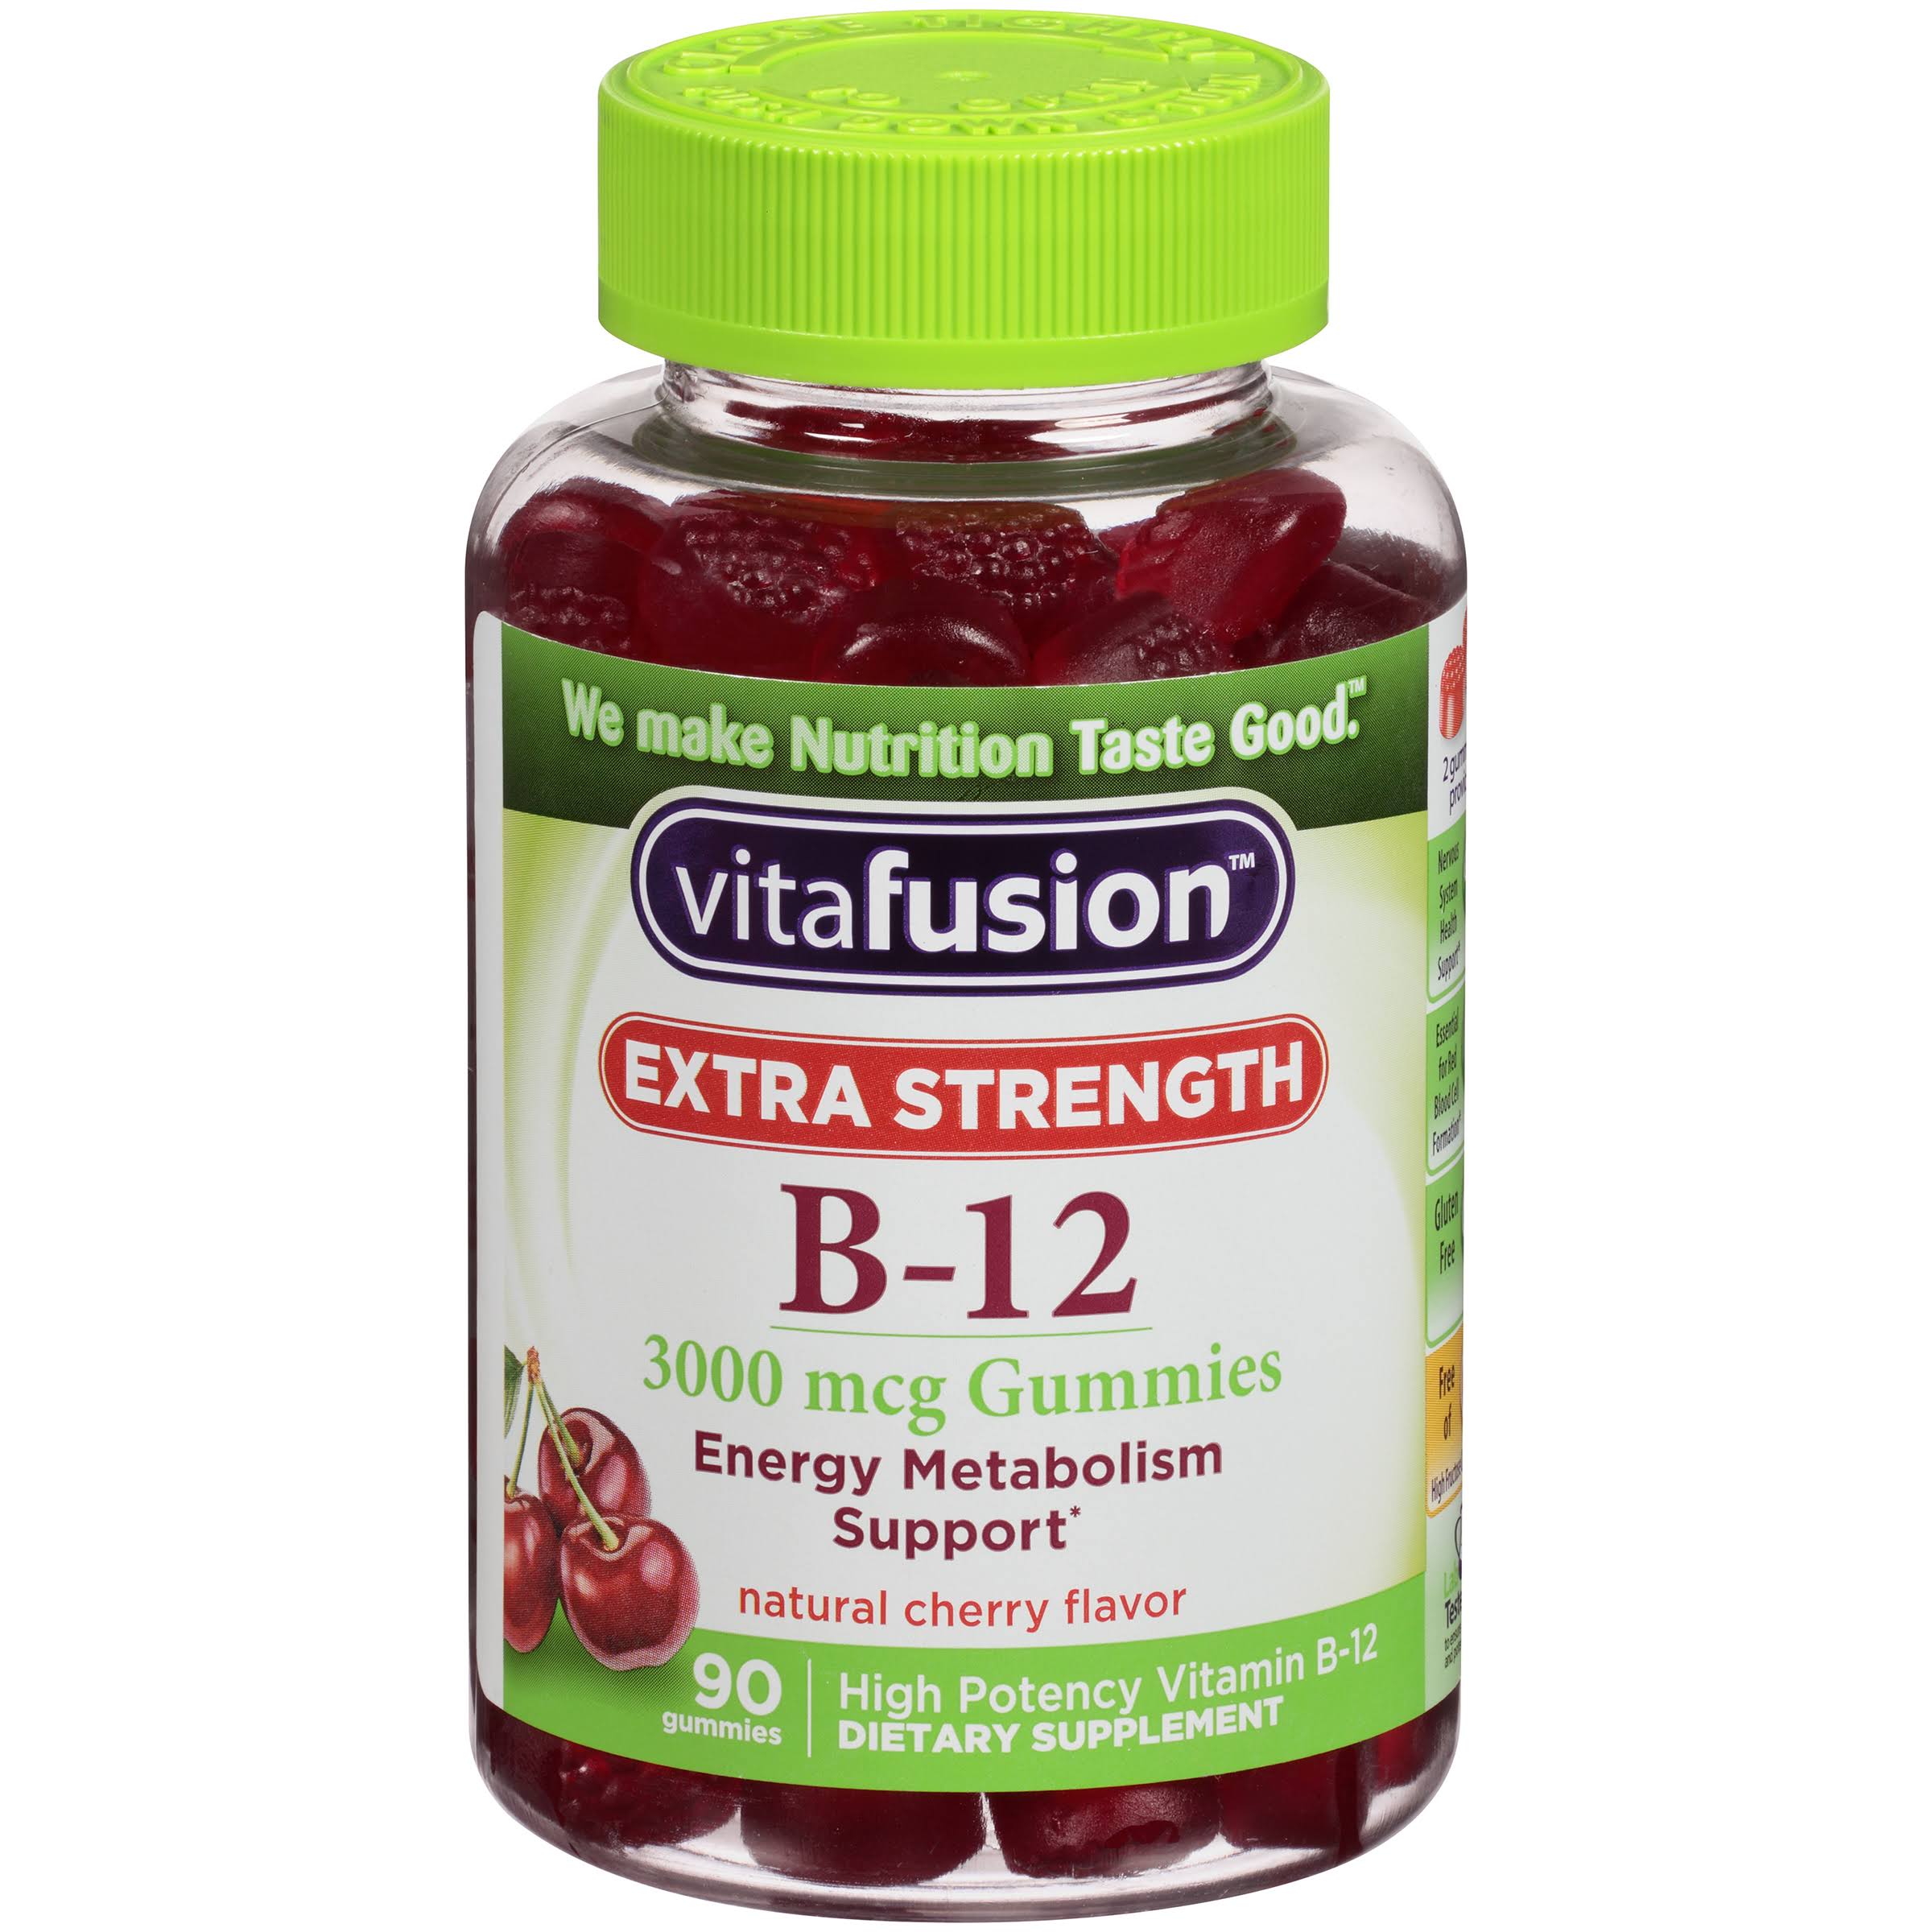 Vitafusion Extra Strength B-12 Gummies - 90 Gummies